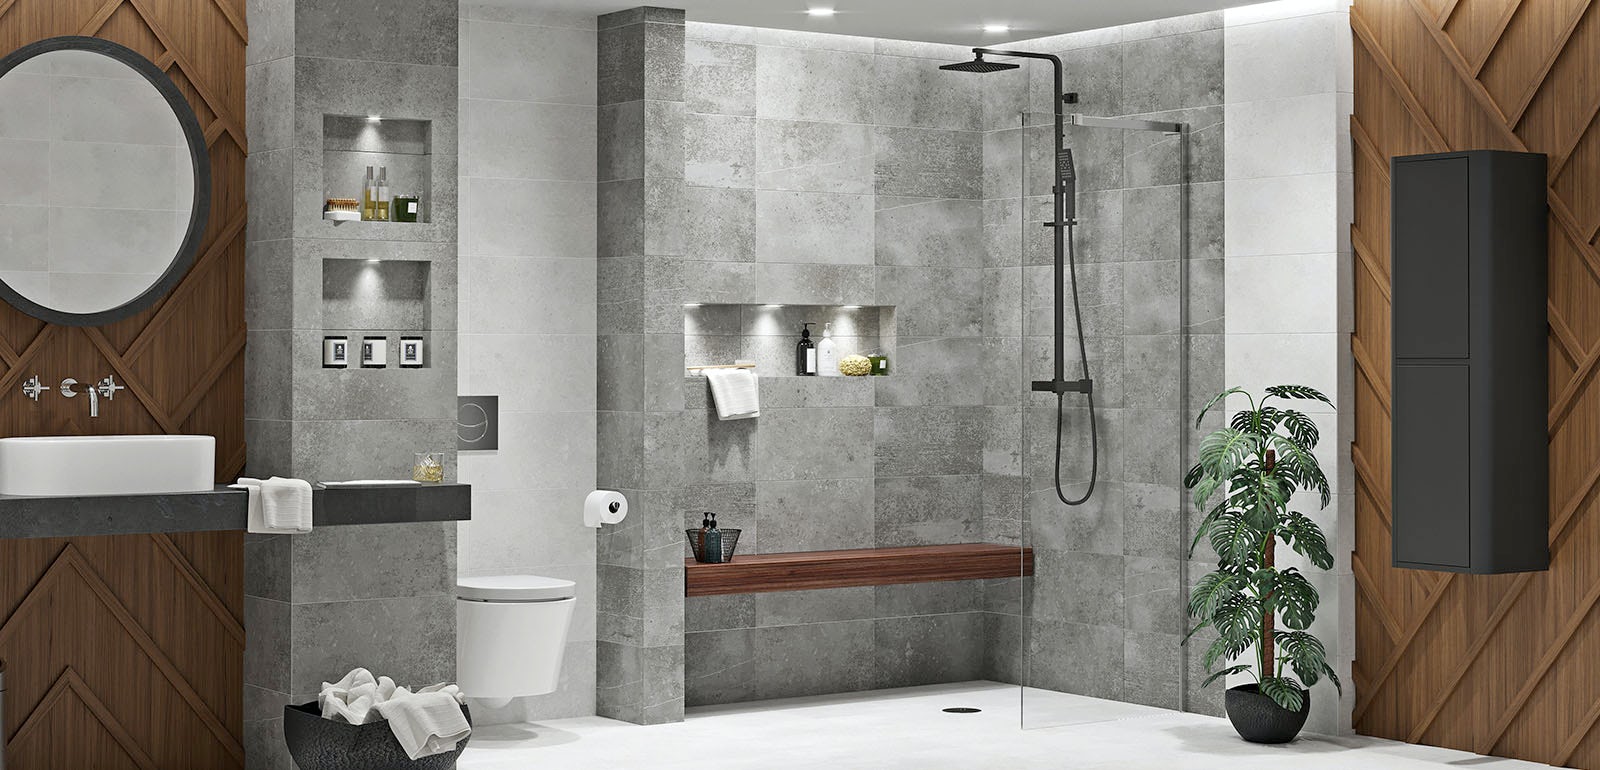 Curbless shower- industrial bathroom